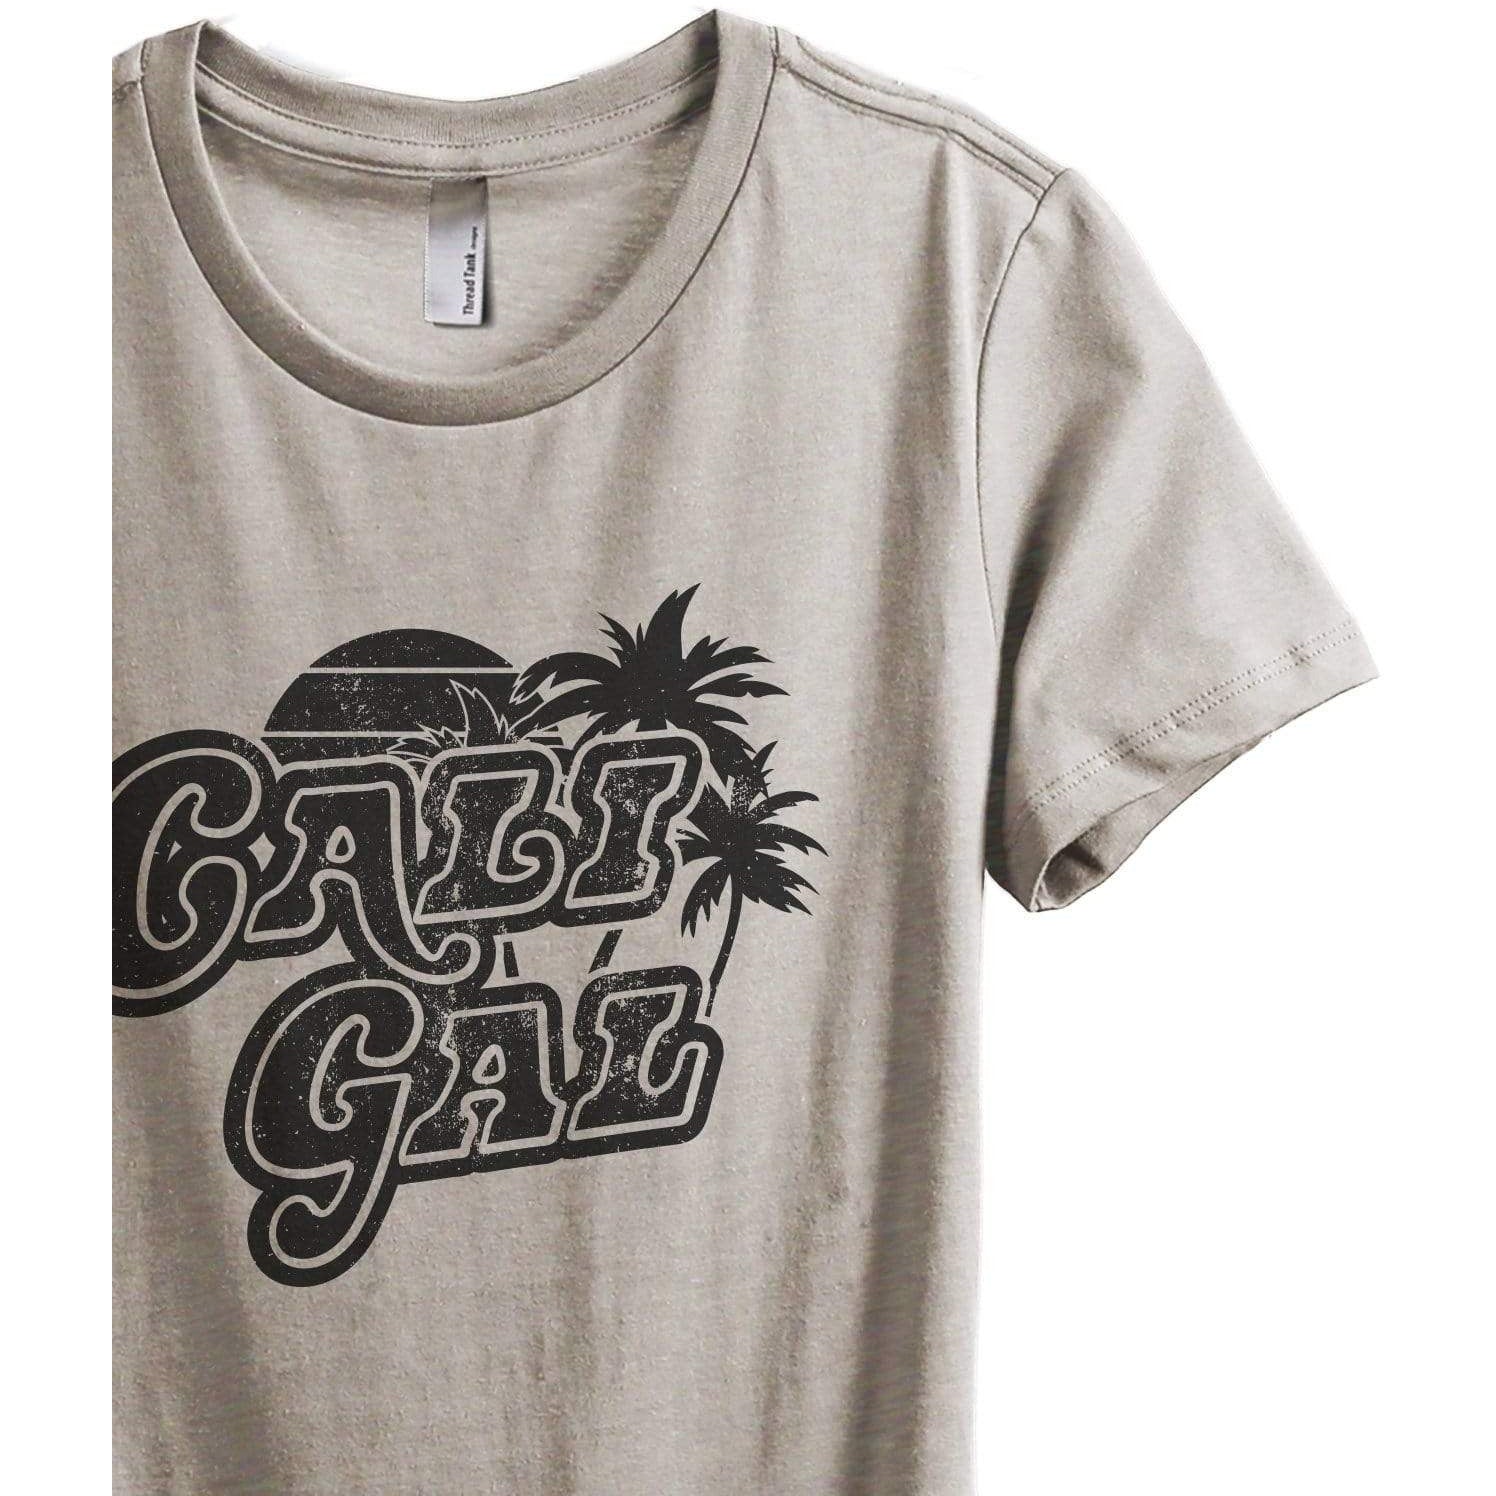 California Gal Women's Relaxed Crewneck T-Shirt Top Tee Heather Tan